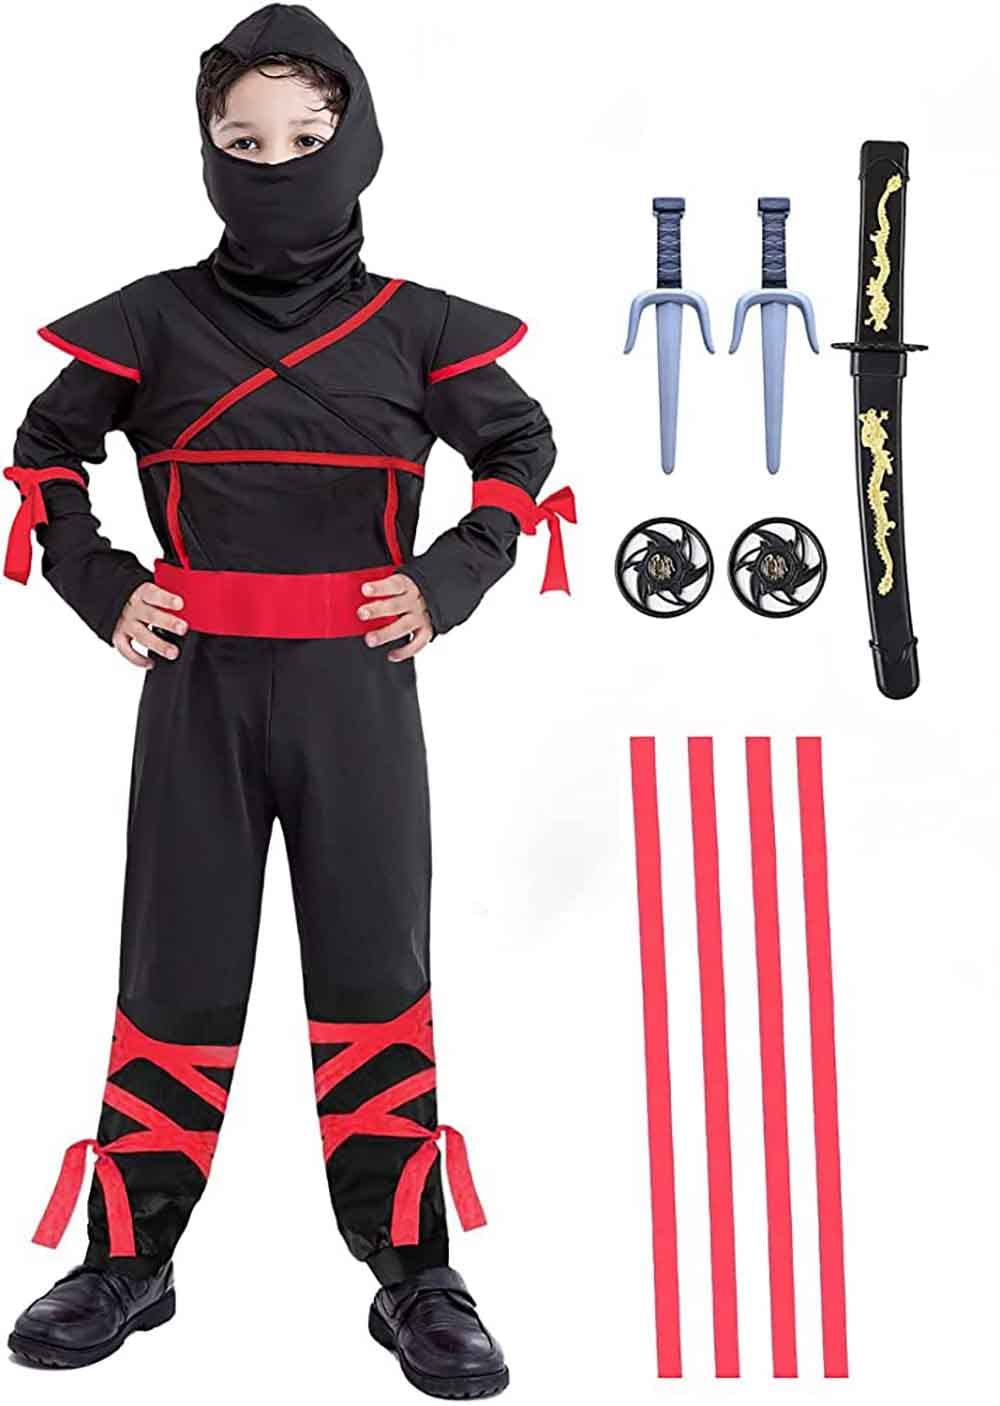 Fairycece Ninja Costume for Boys 4T-14